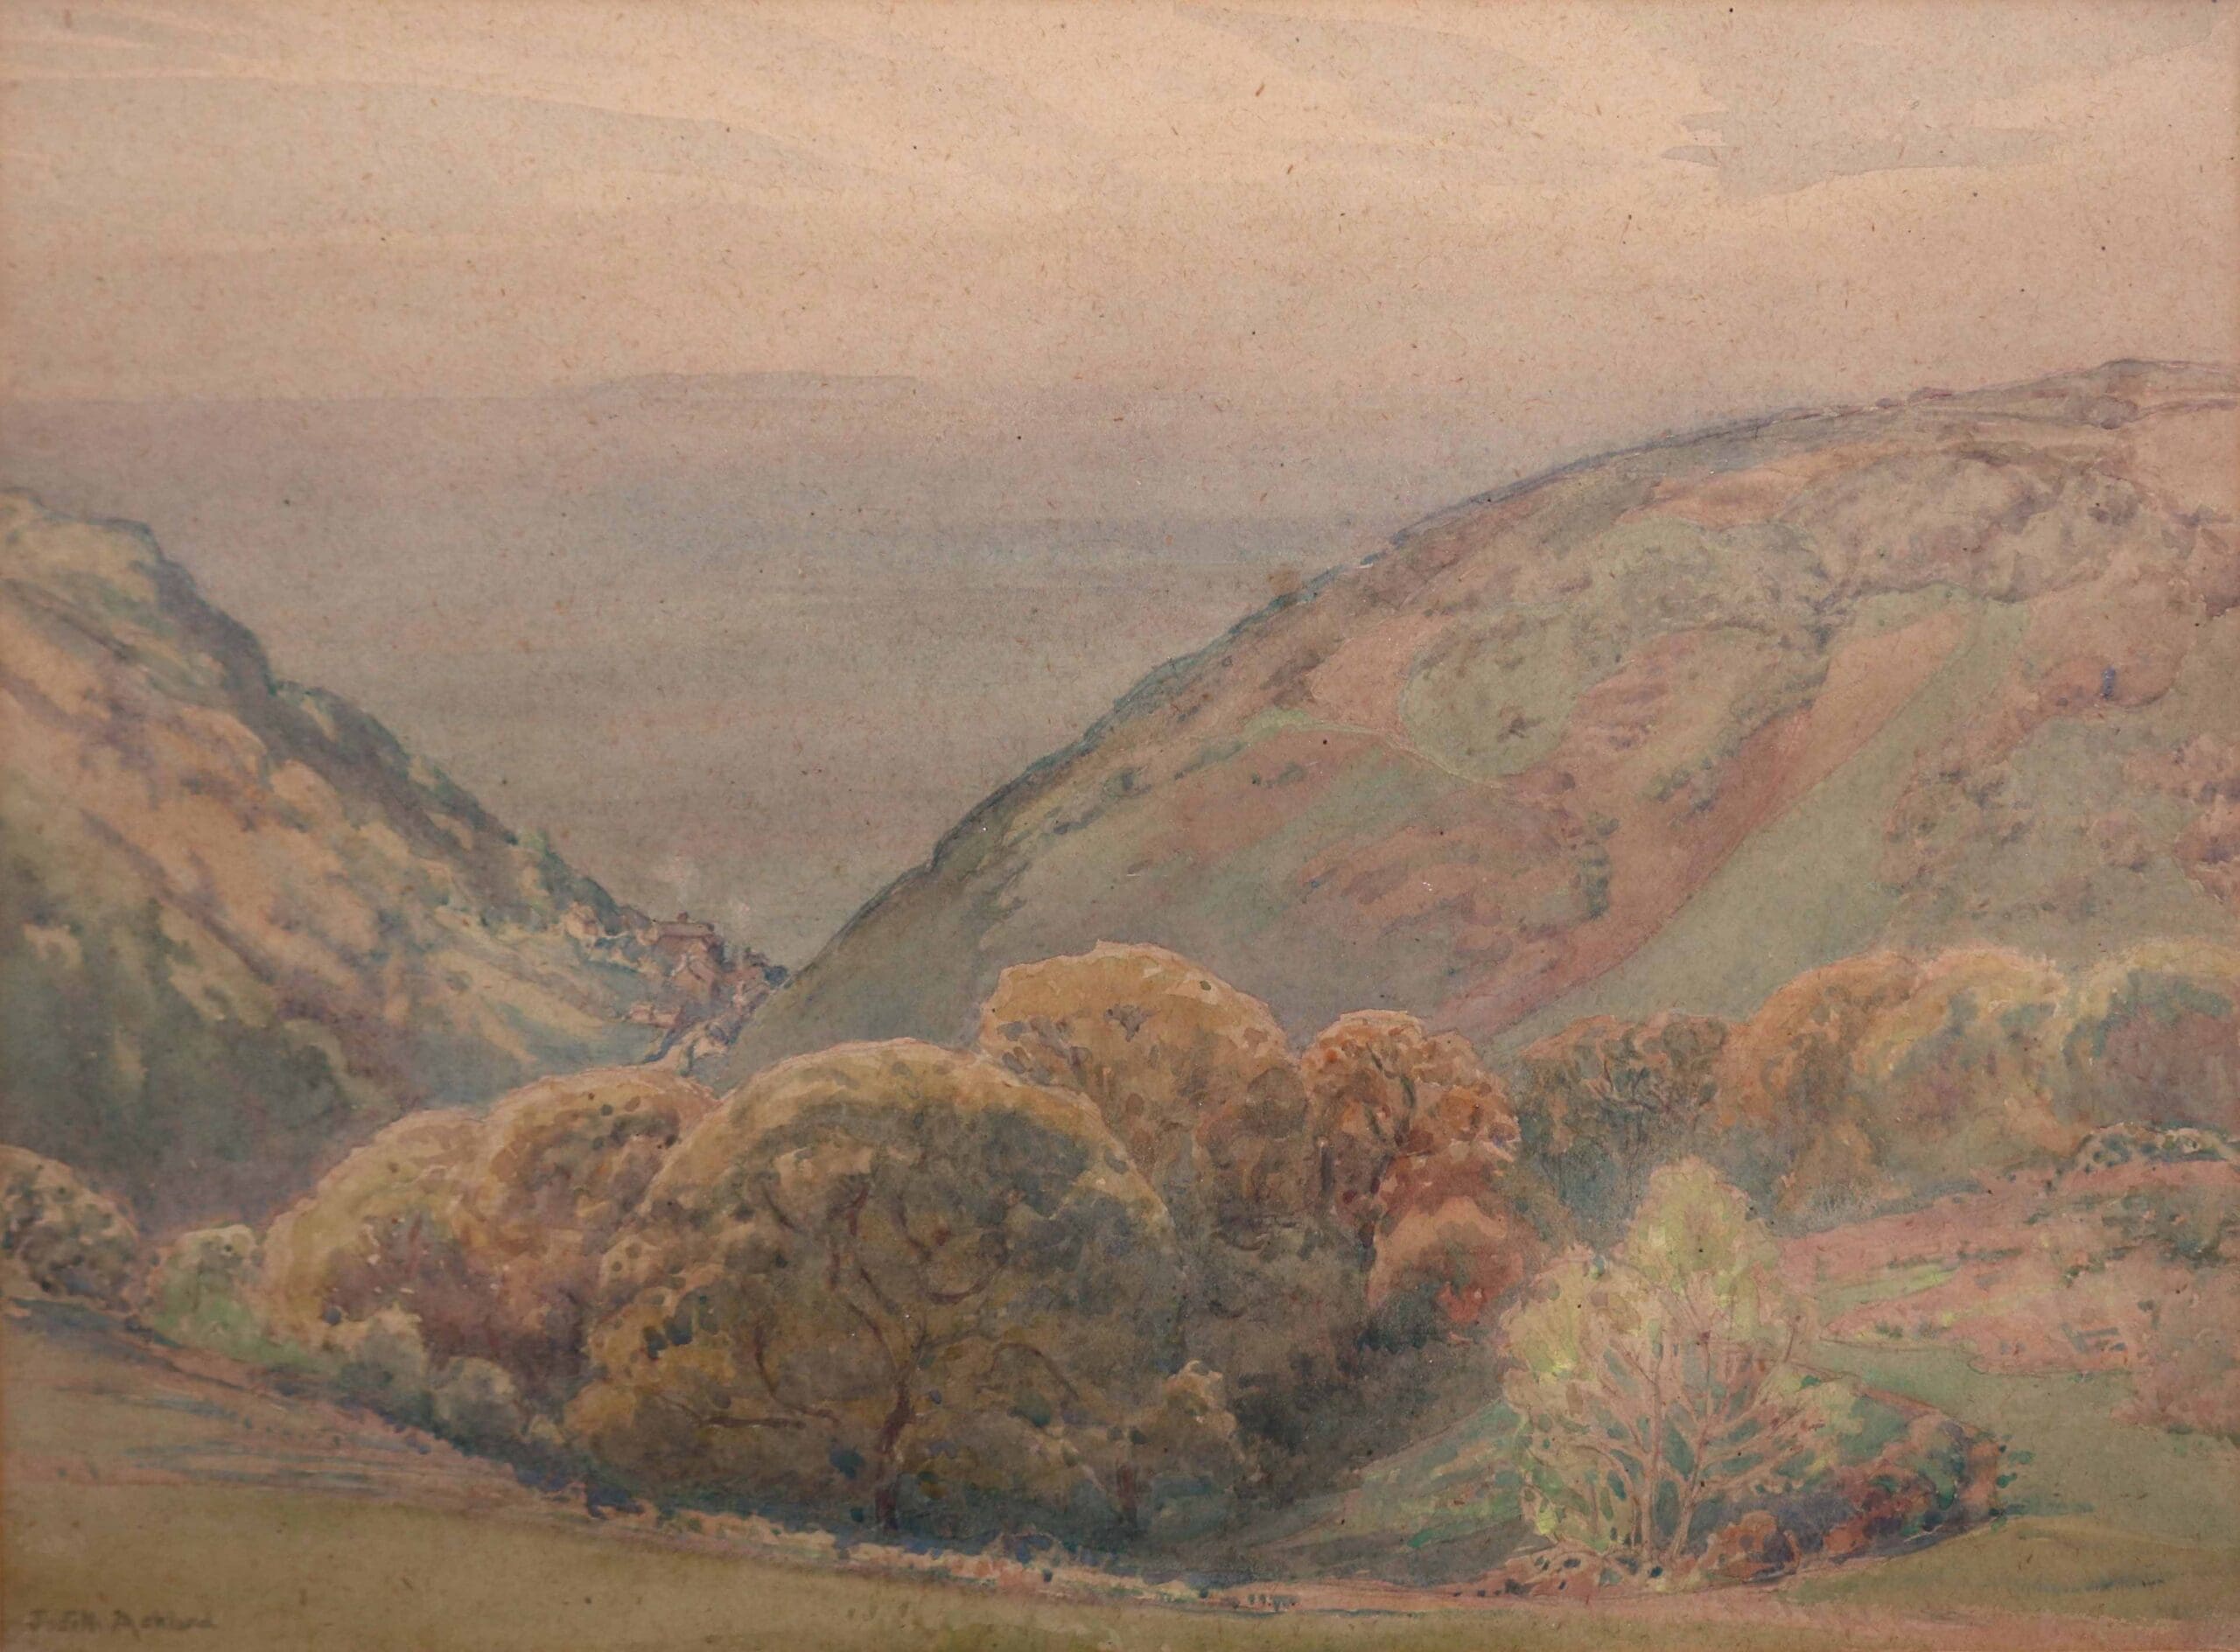 Judith Ackland's watercolour of North Devon coastline viewed through the hills